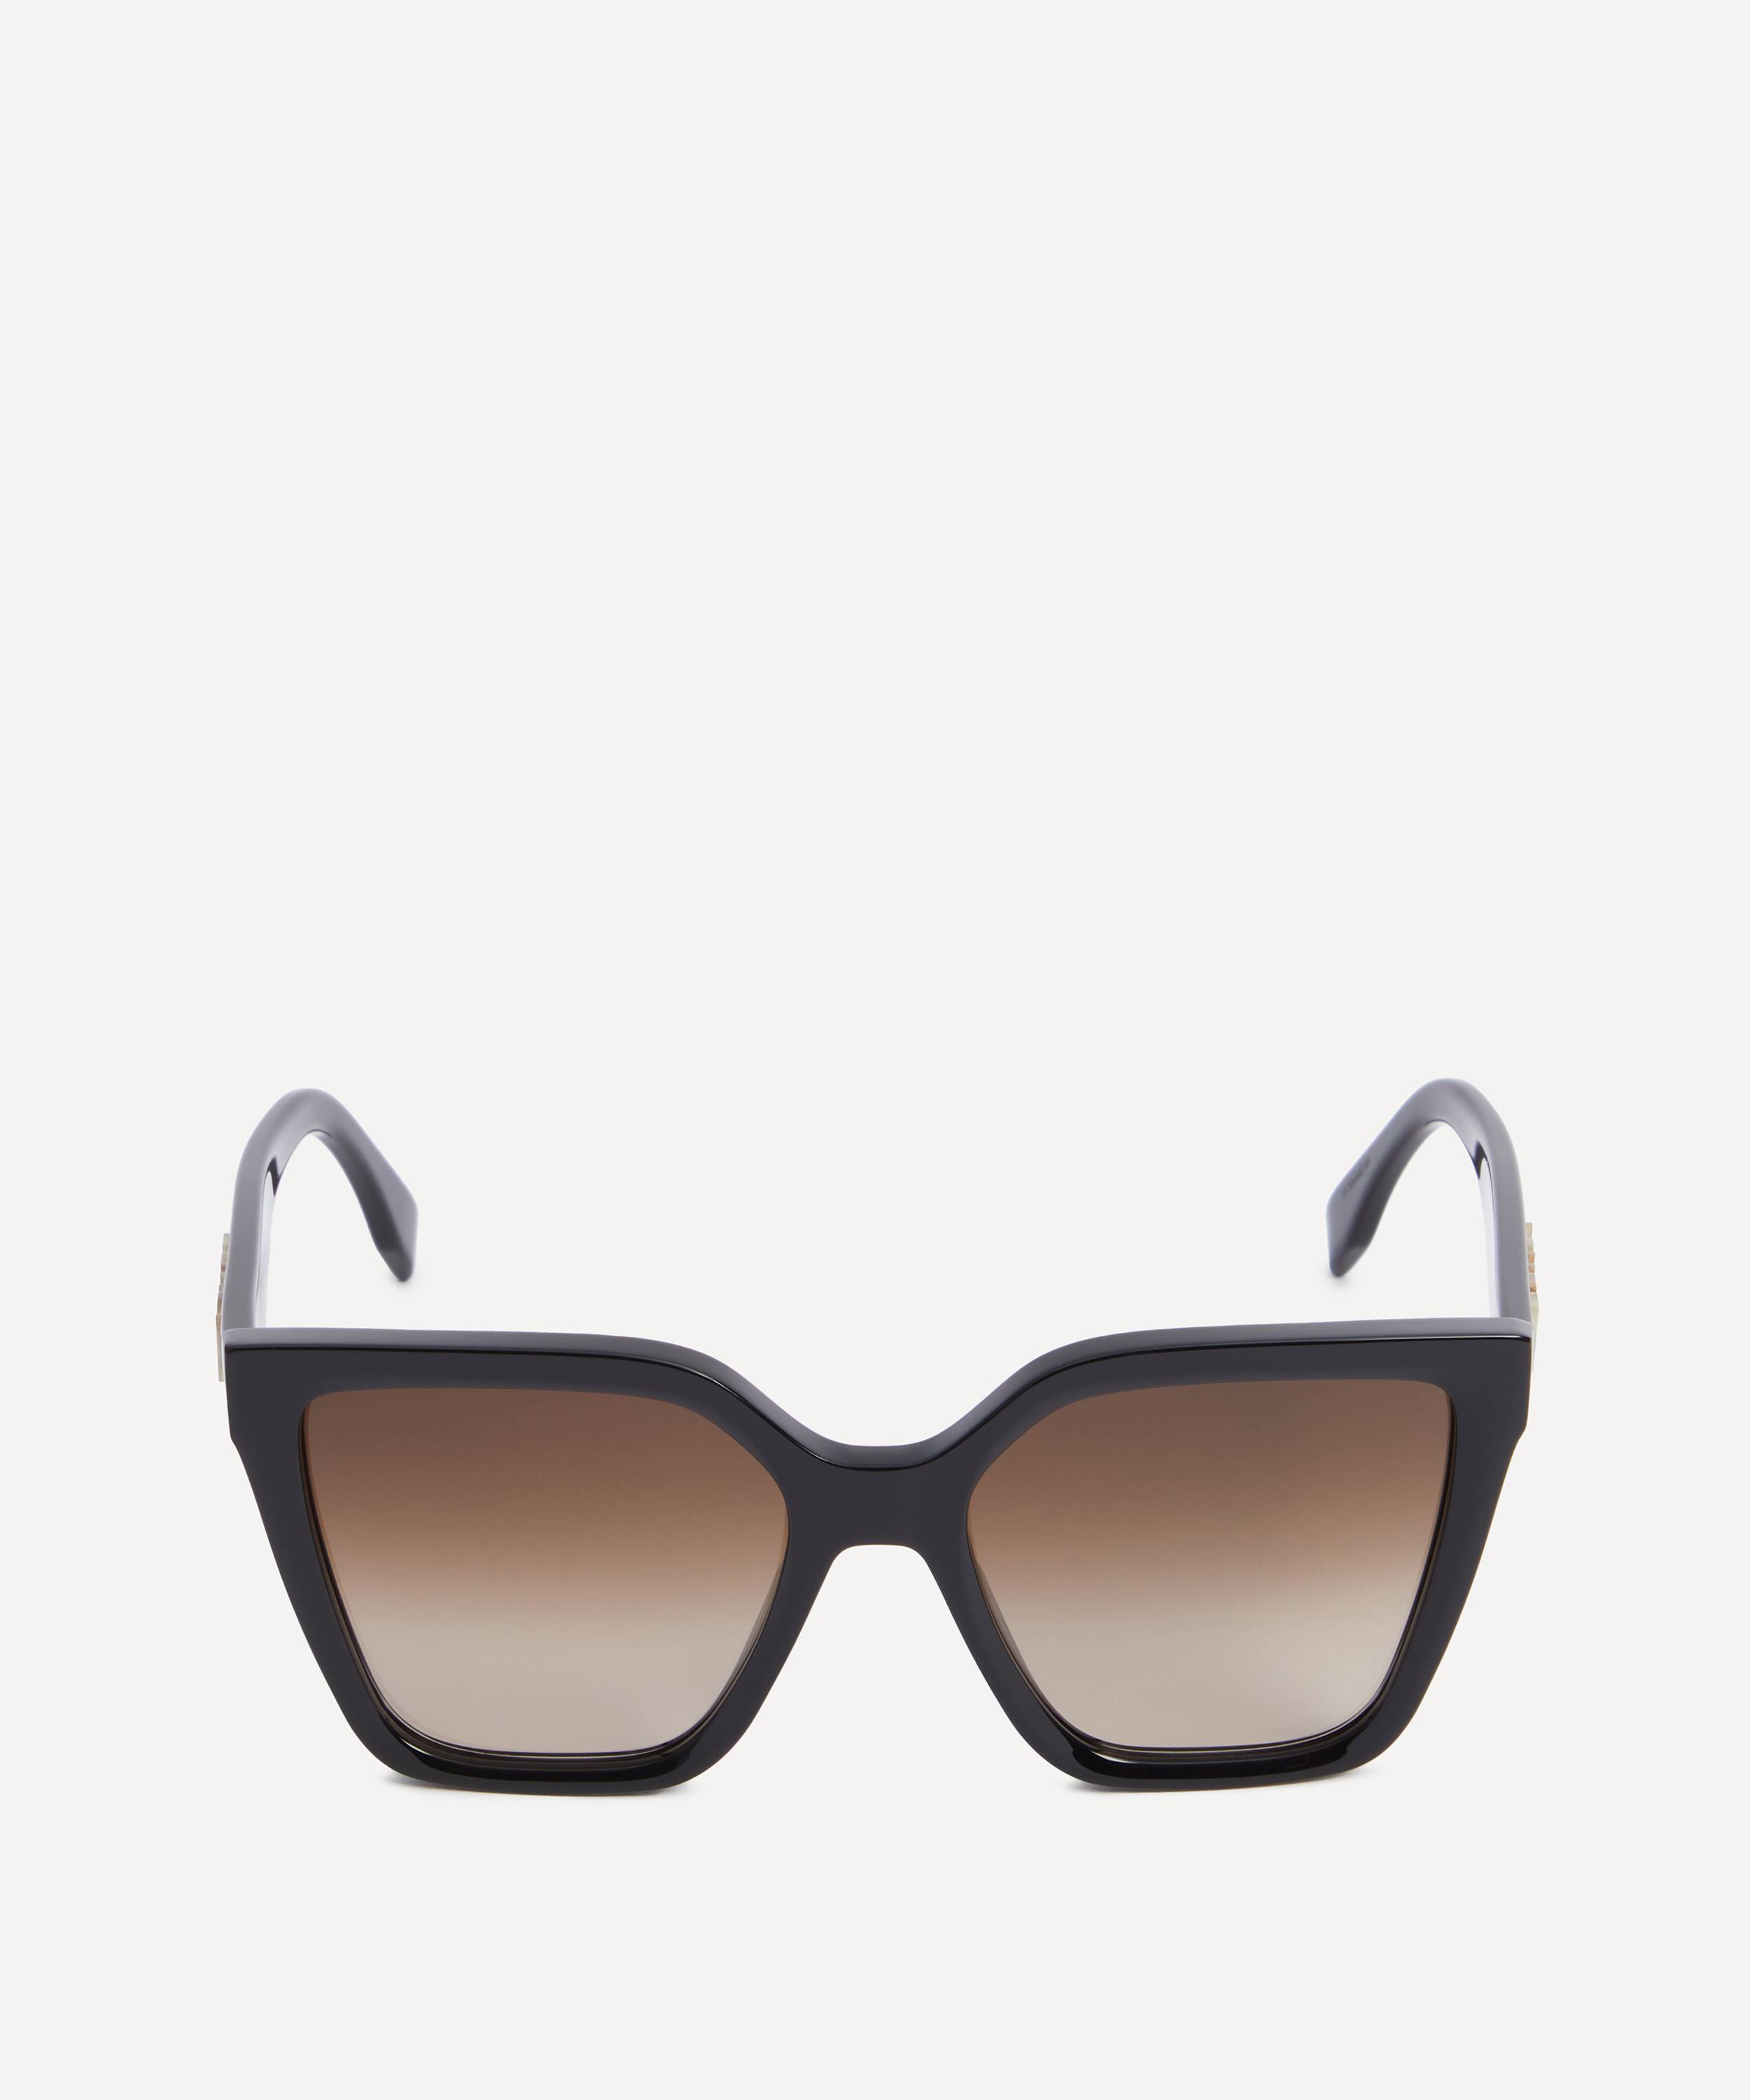 Fendi Men's FF-Lens Bi-Layer Square Sunglasses